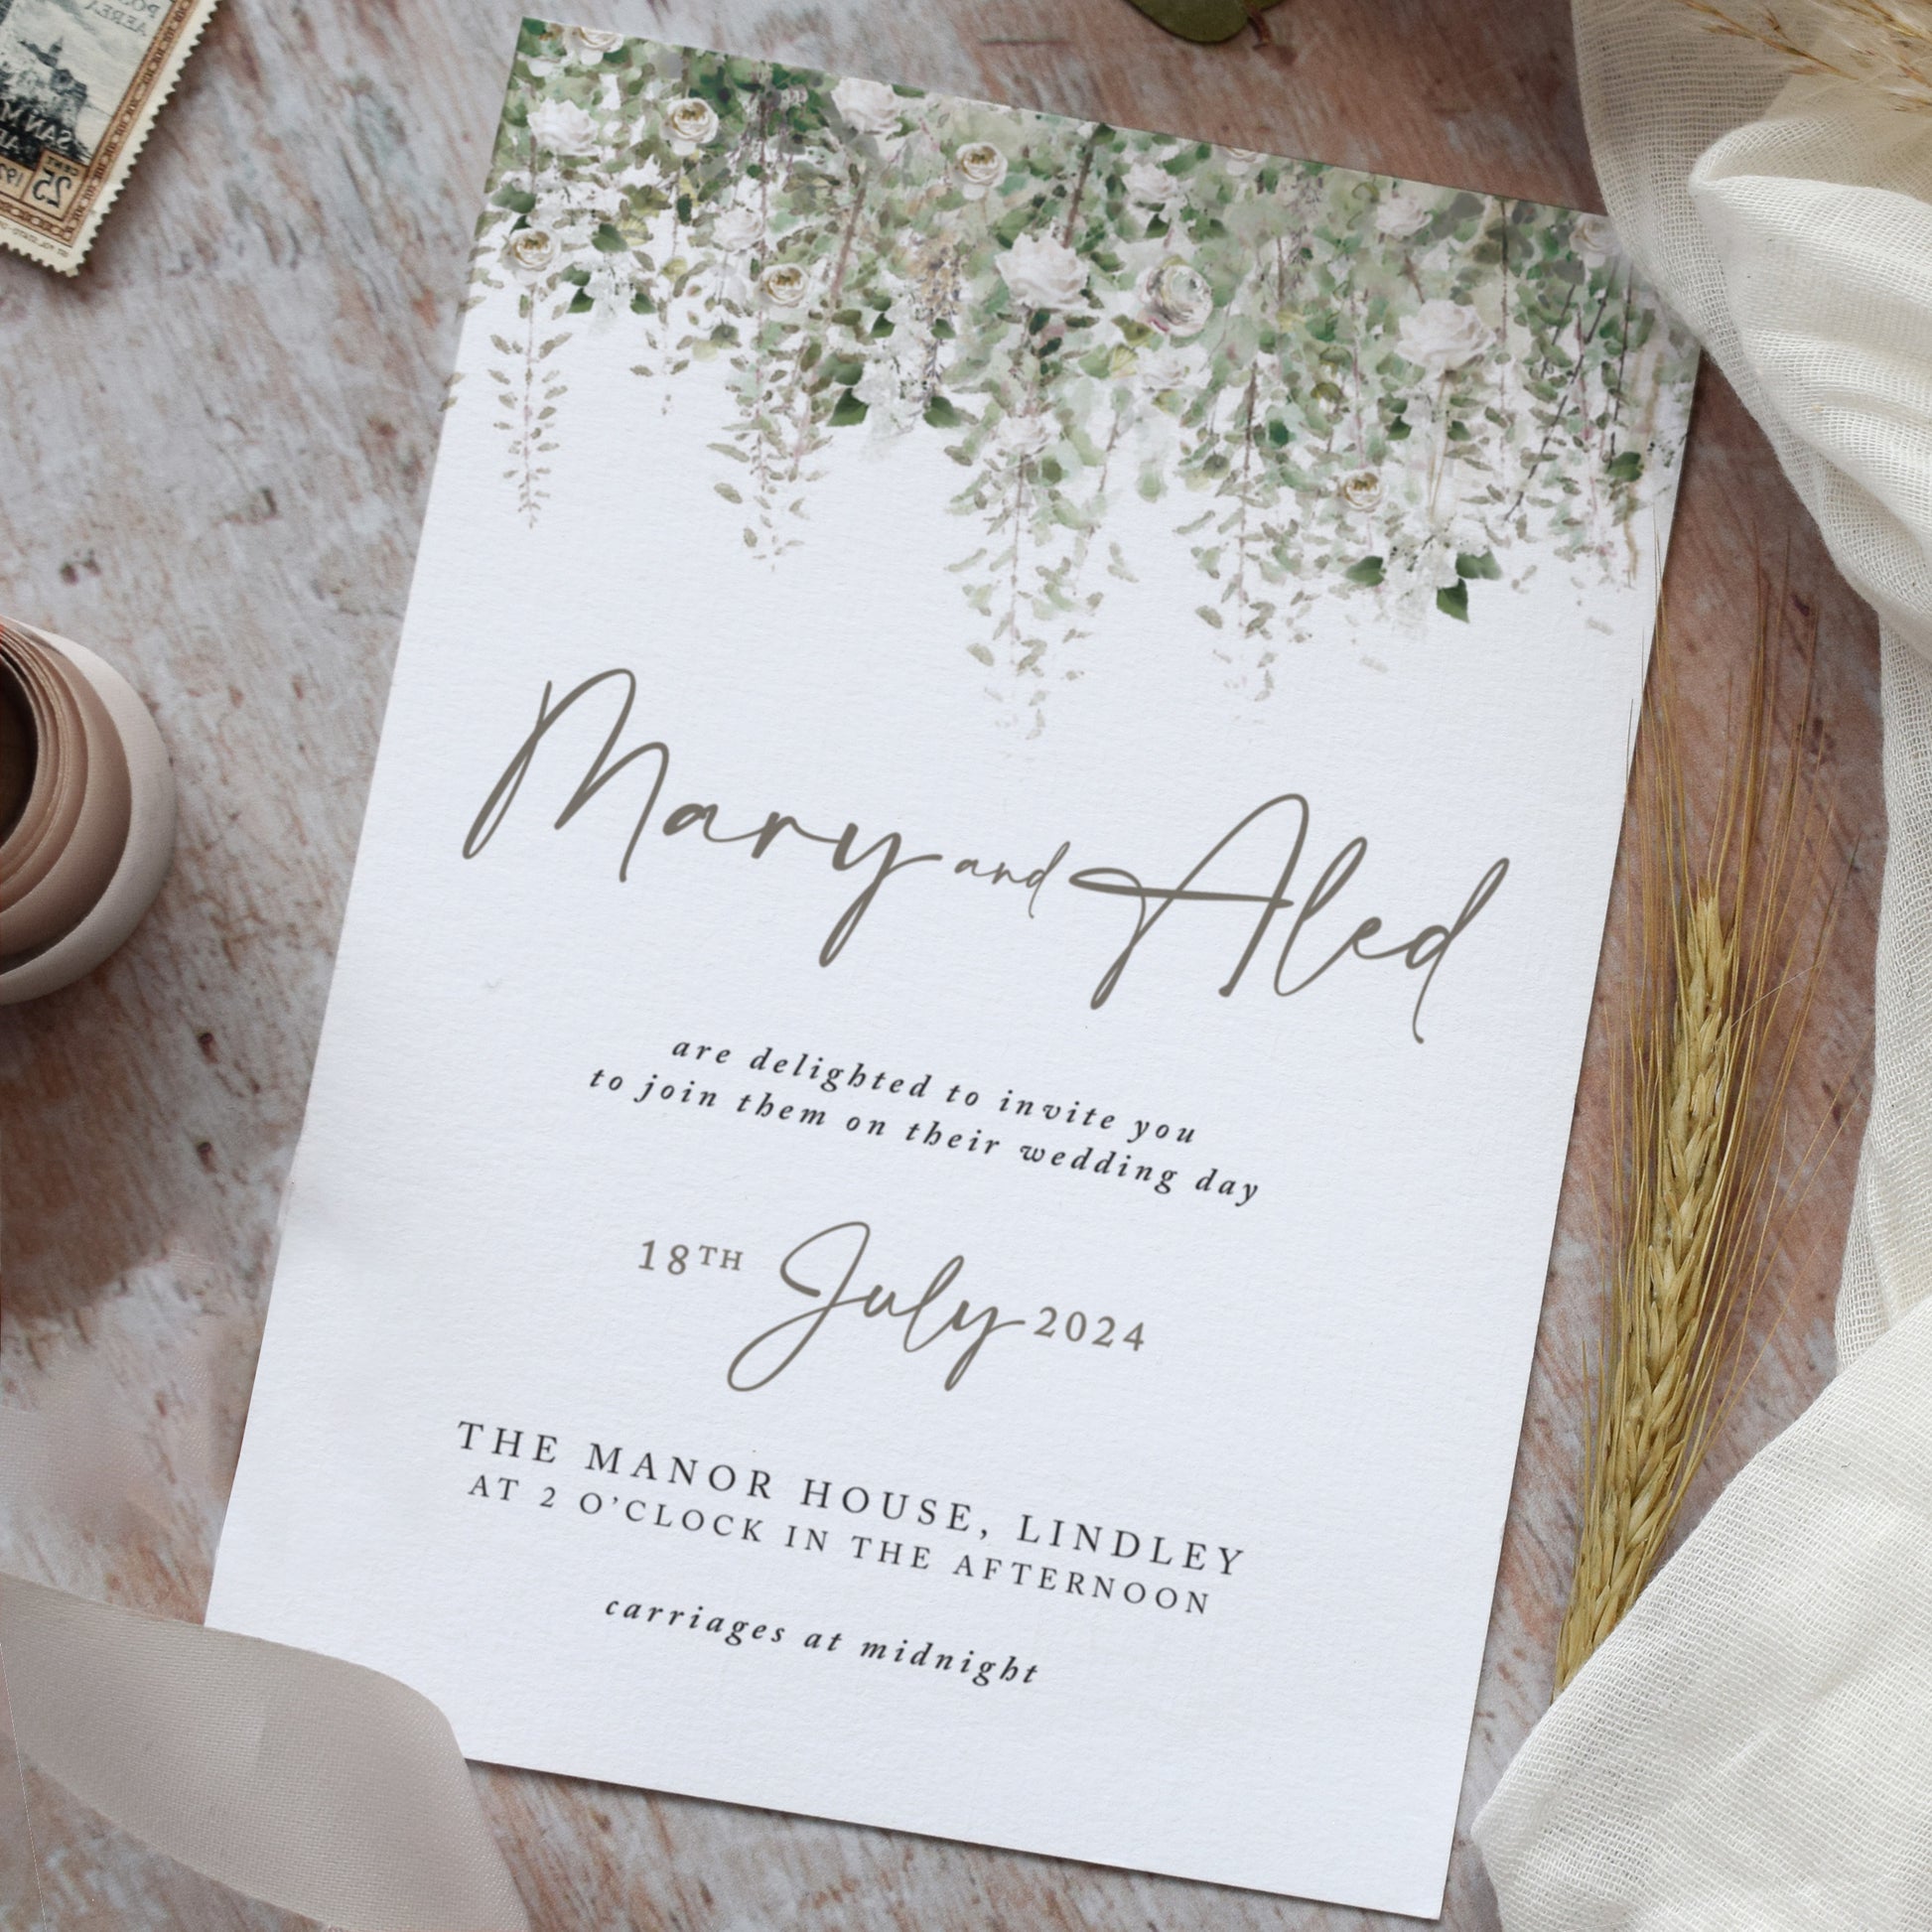 Rustic wedding invitations featuring sage green foliage